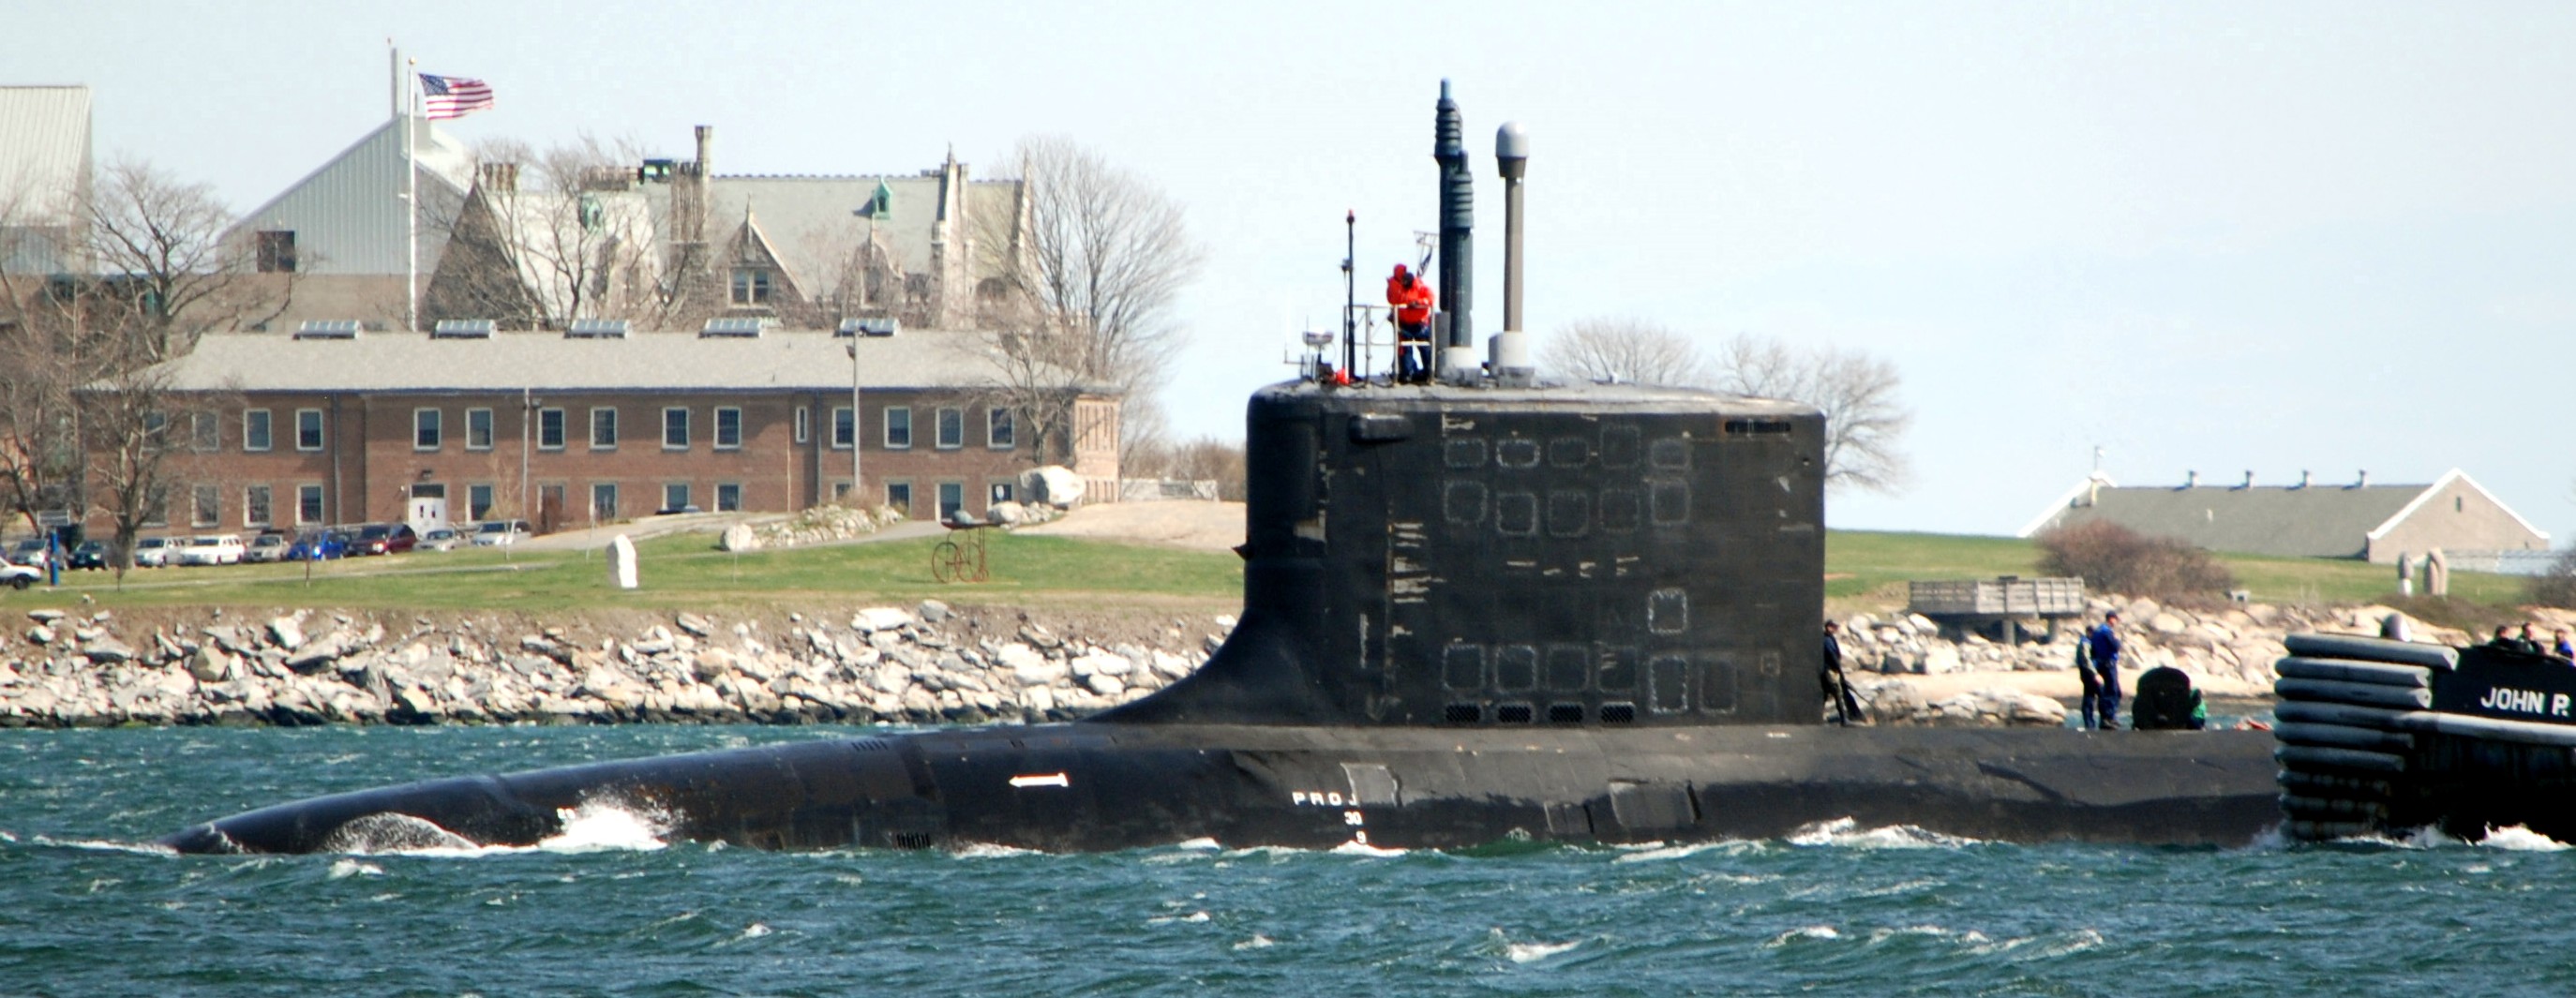 ssn-779 uss new mexico virginia class attack submarine us navy 14